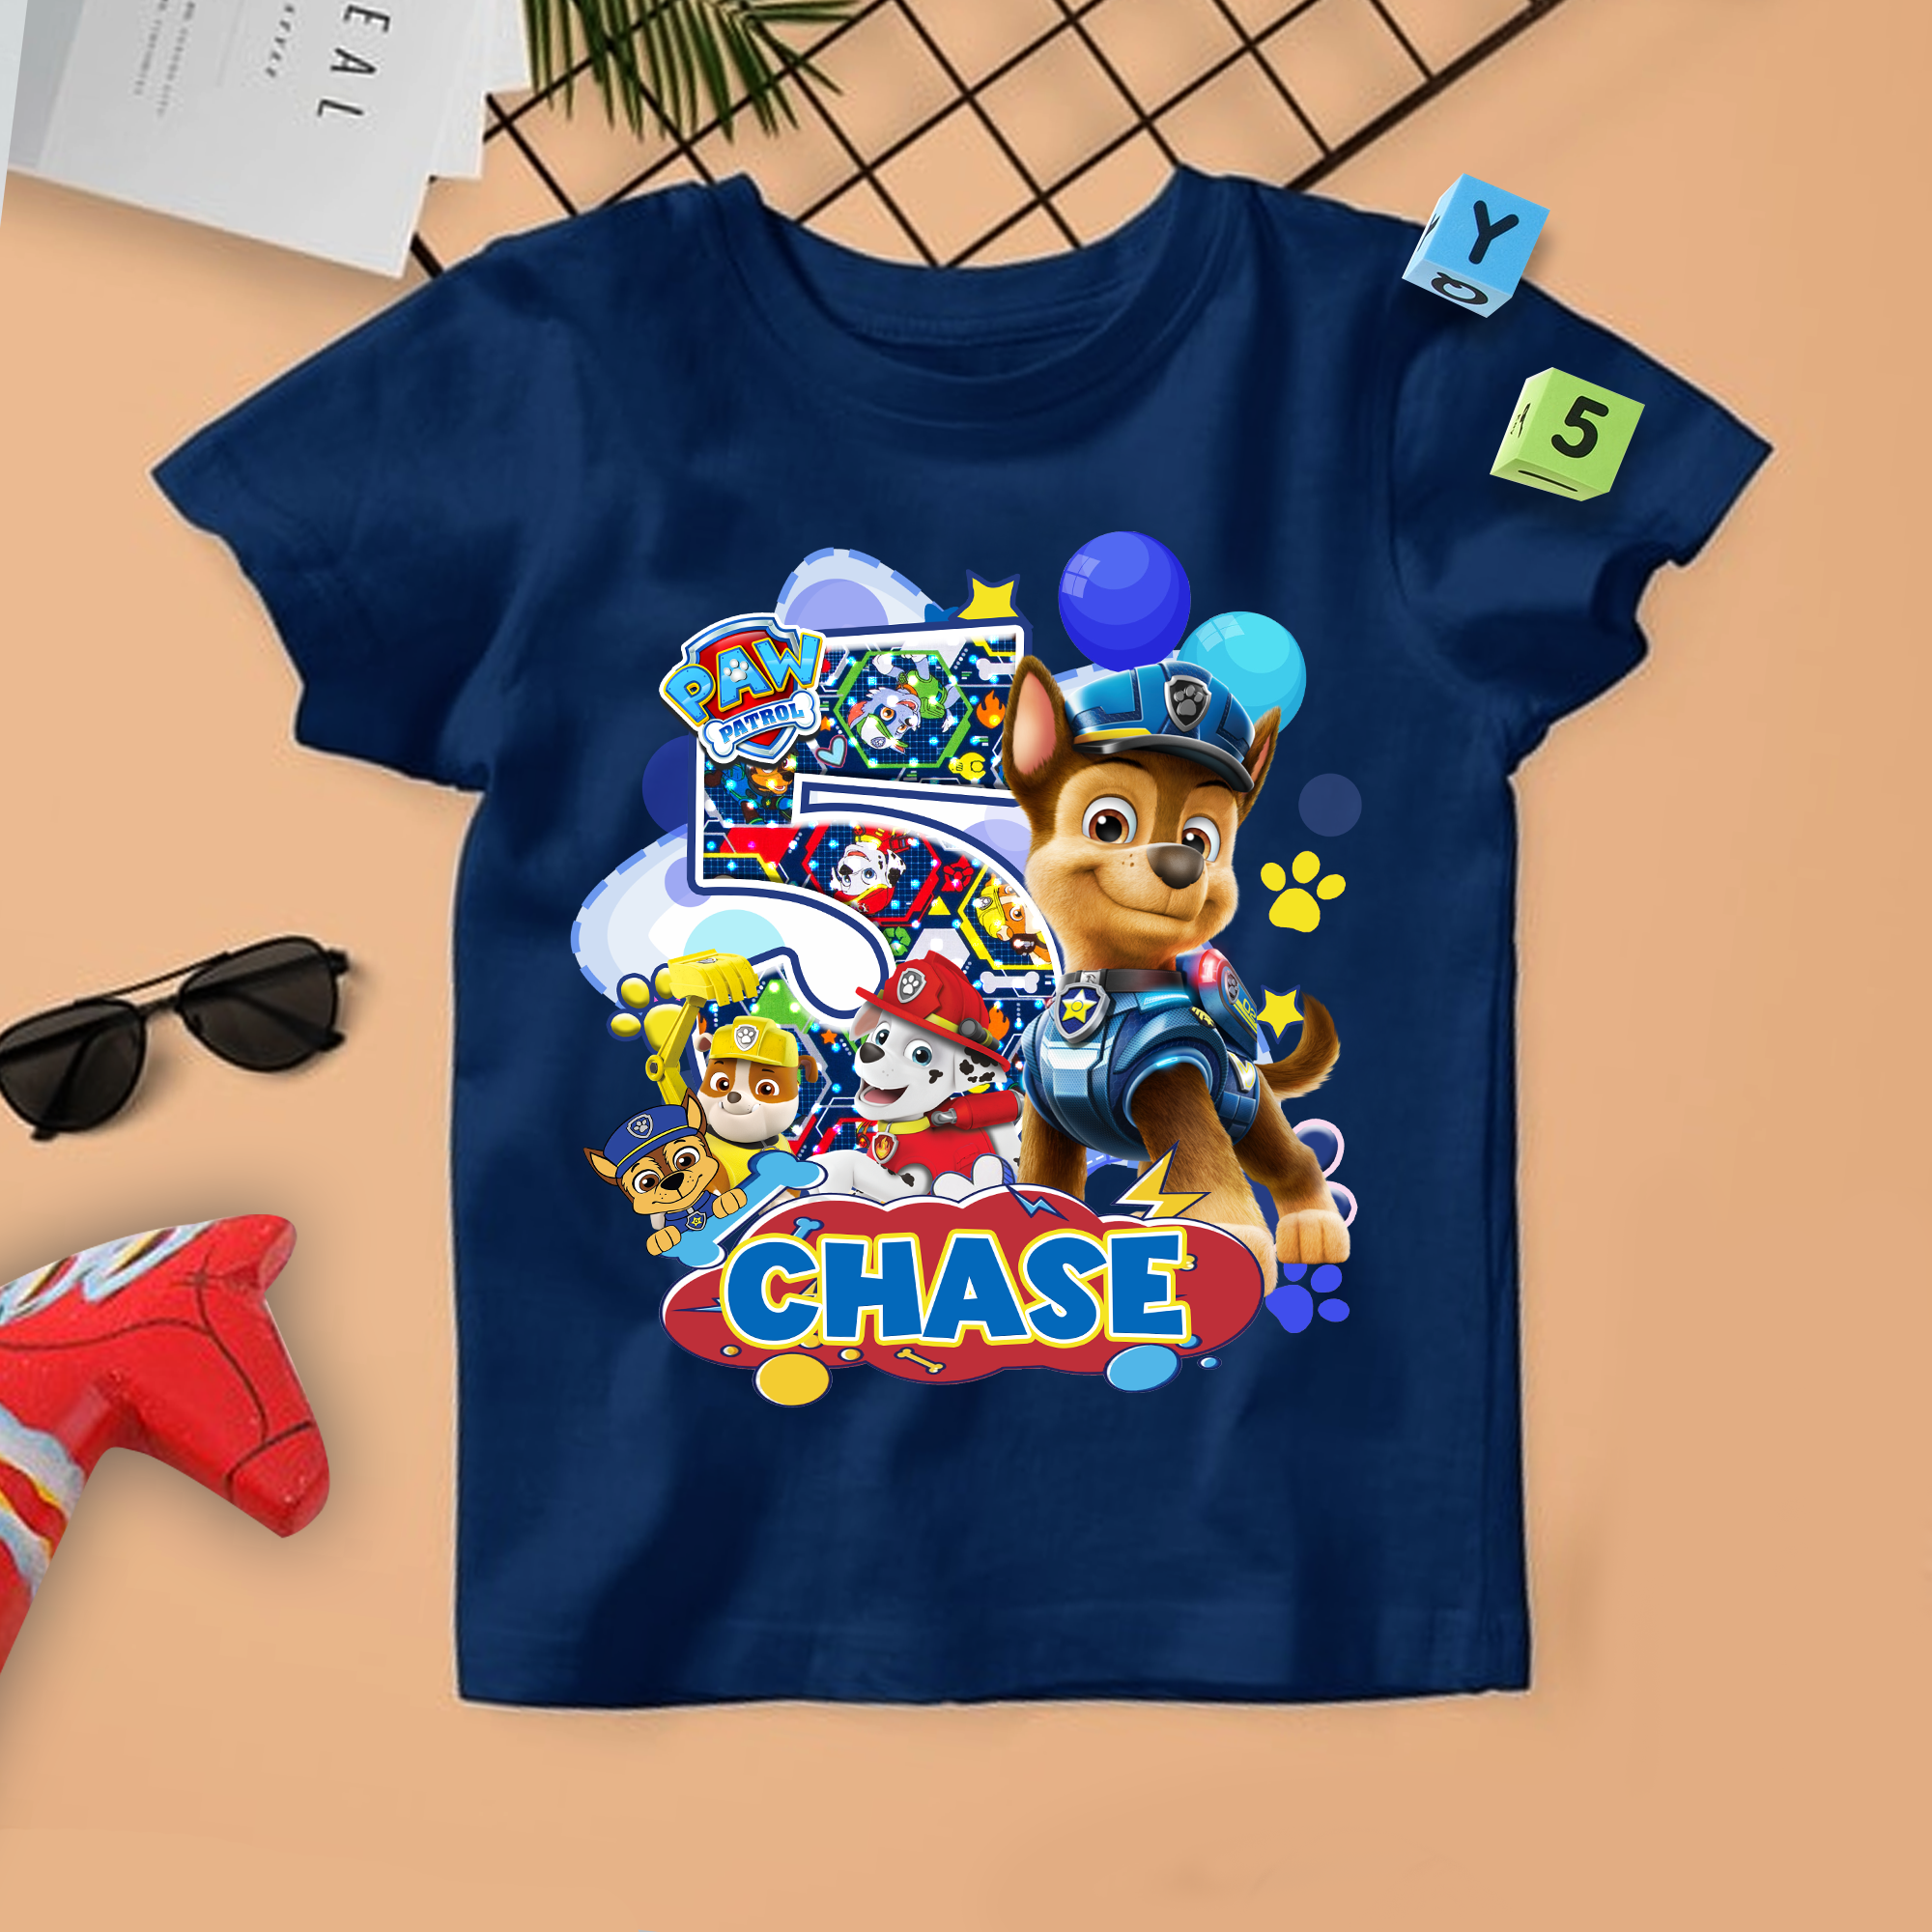 Chase Paw Patrol Birthday Boy Shirt, Custom Paw Patrol Shirt, Paw Patrol Outfits, Birthday Gifts